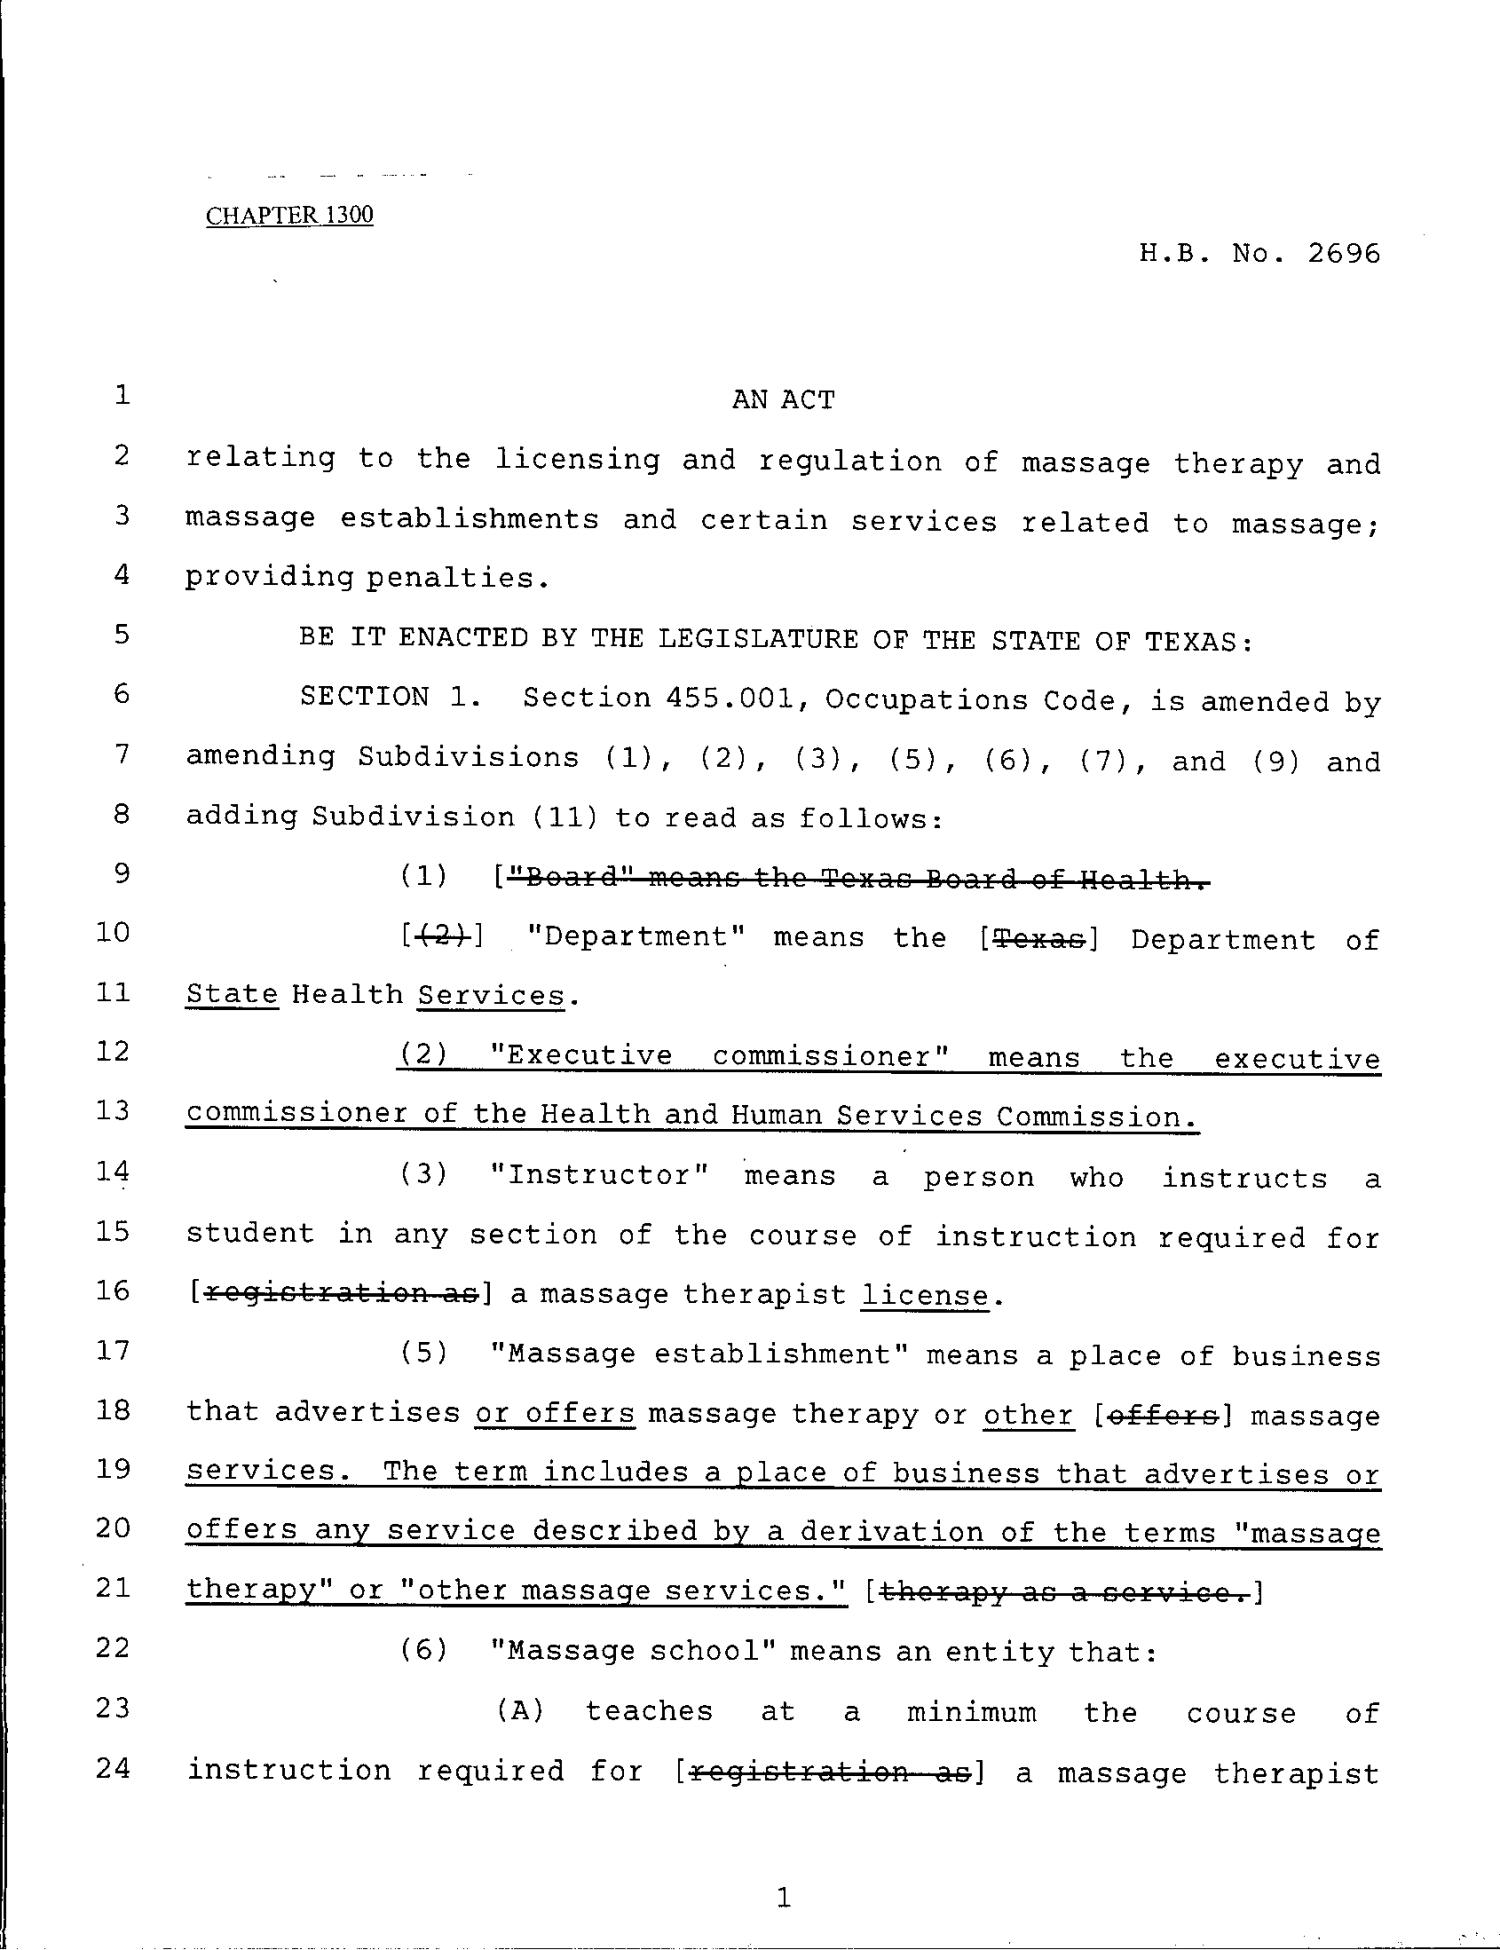 79th Texas Legislature, Regular Session, House Bill 2696, Chapter 1300